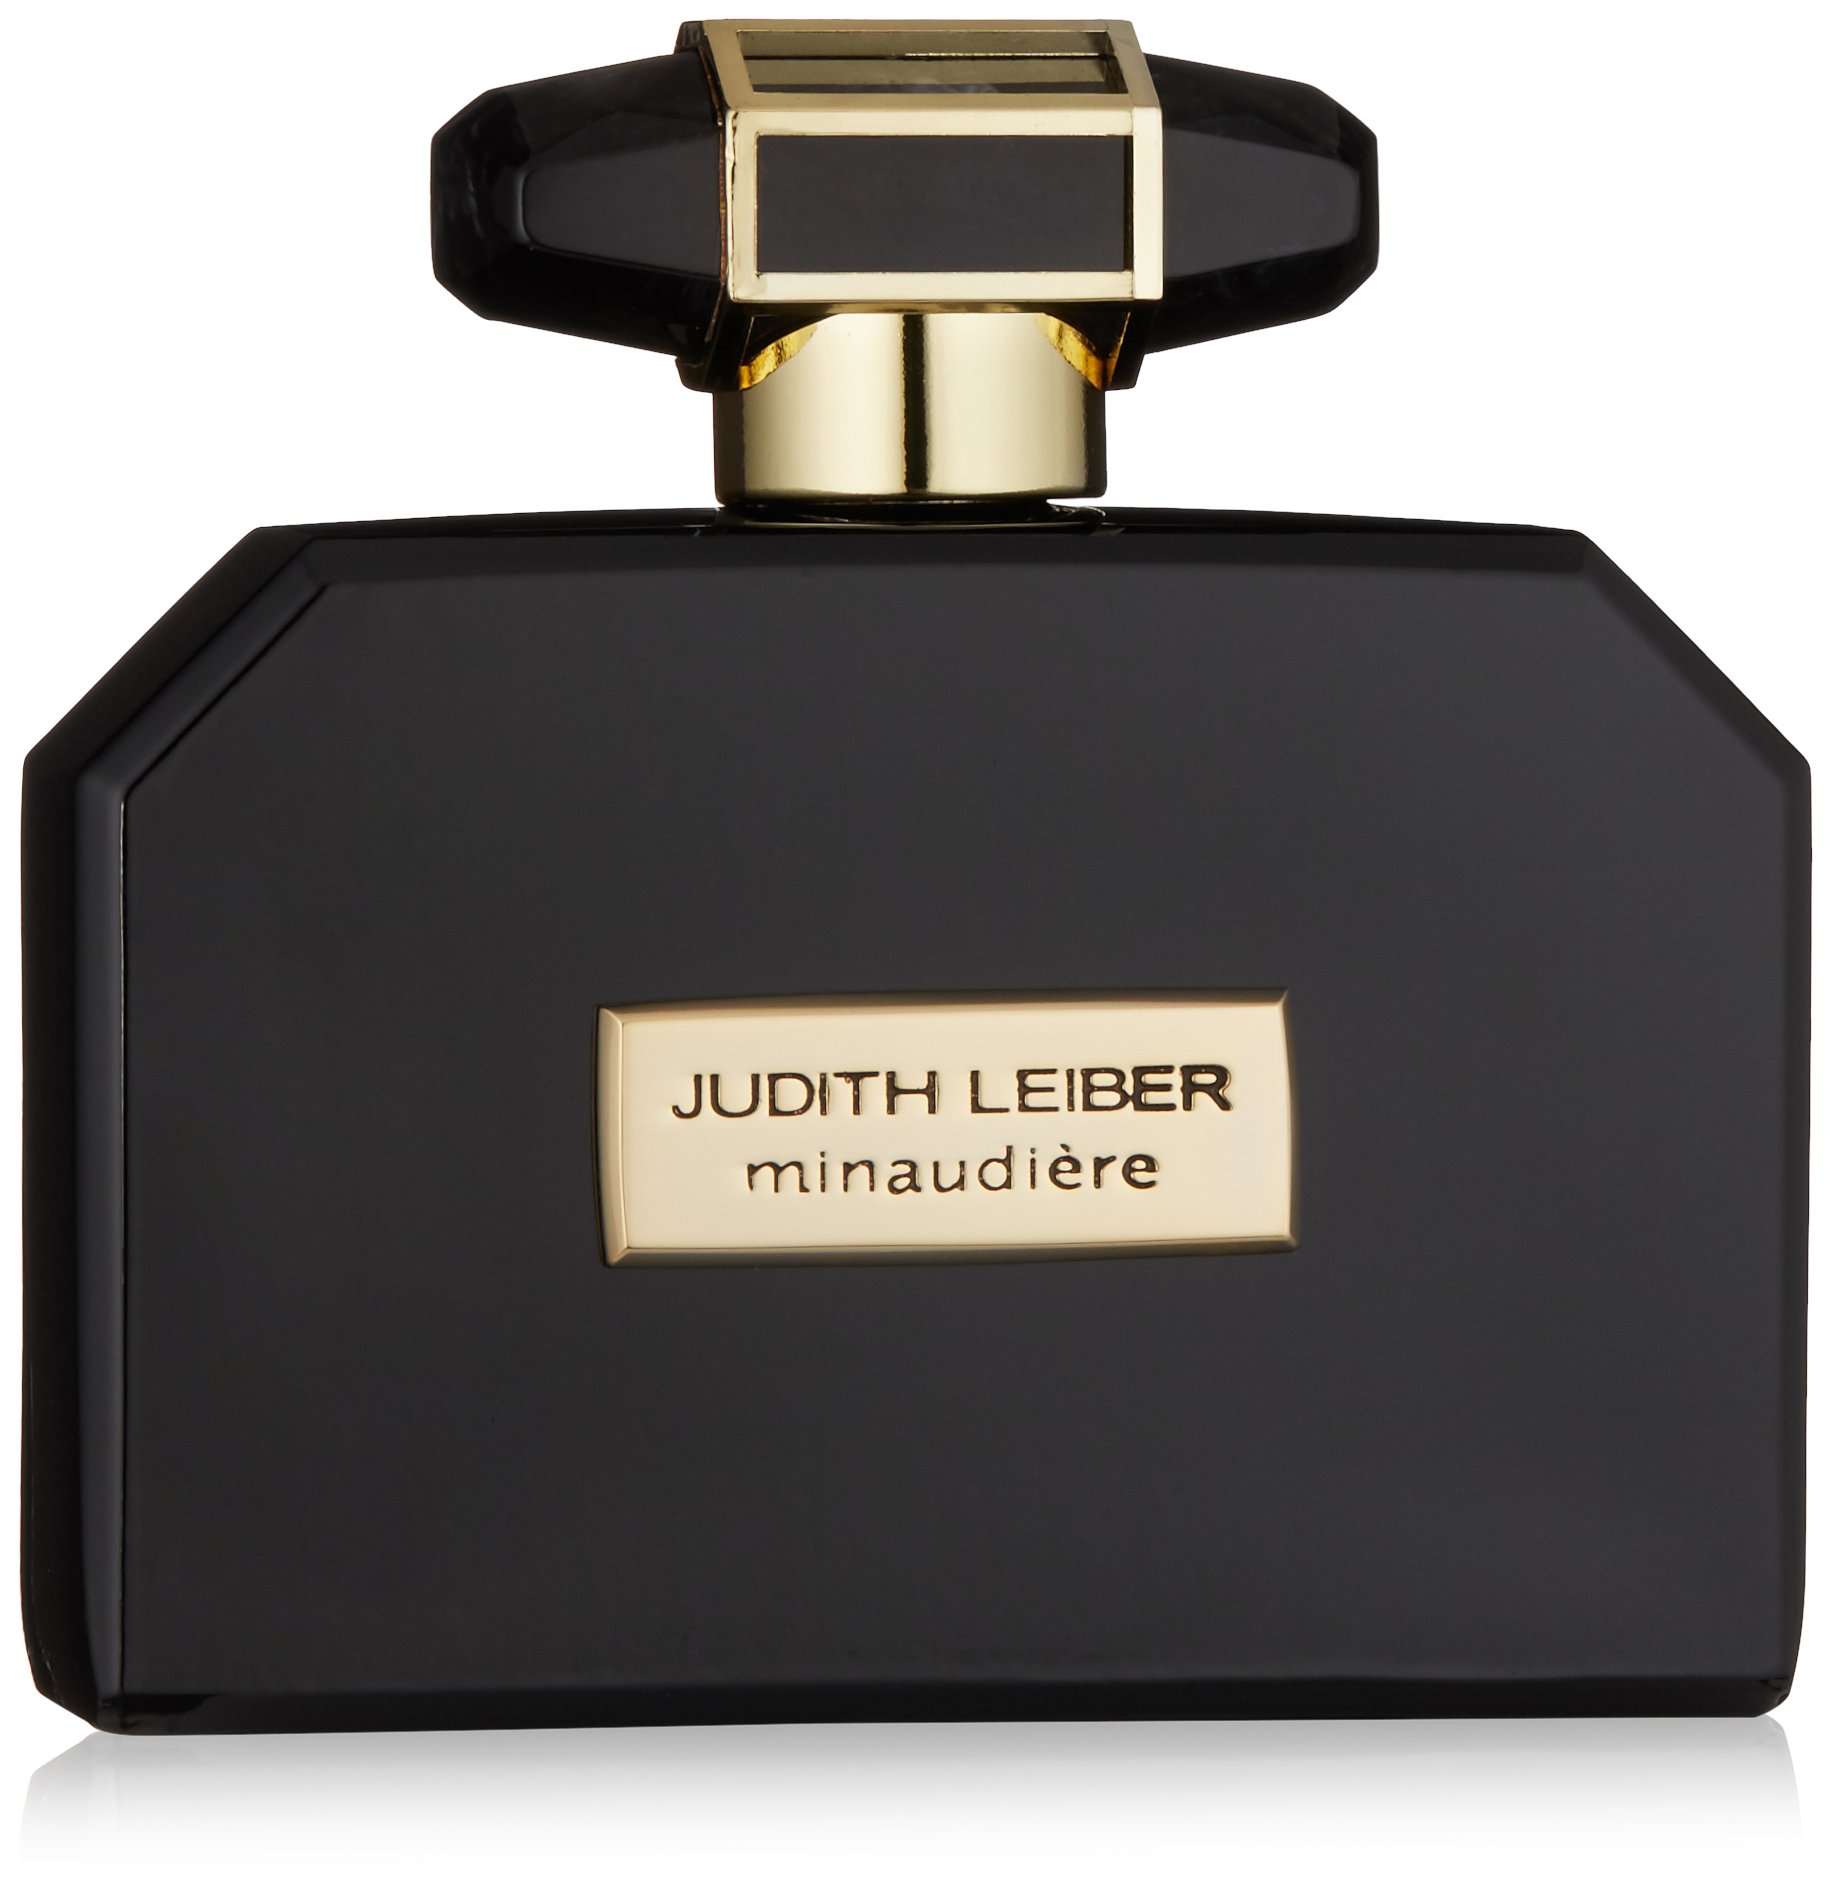 JUDITH LEIBER Minaudiere Oud Eau De Parfum Spray, 3.4 oz